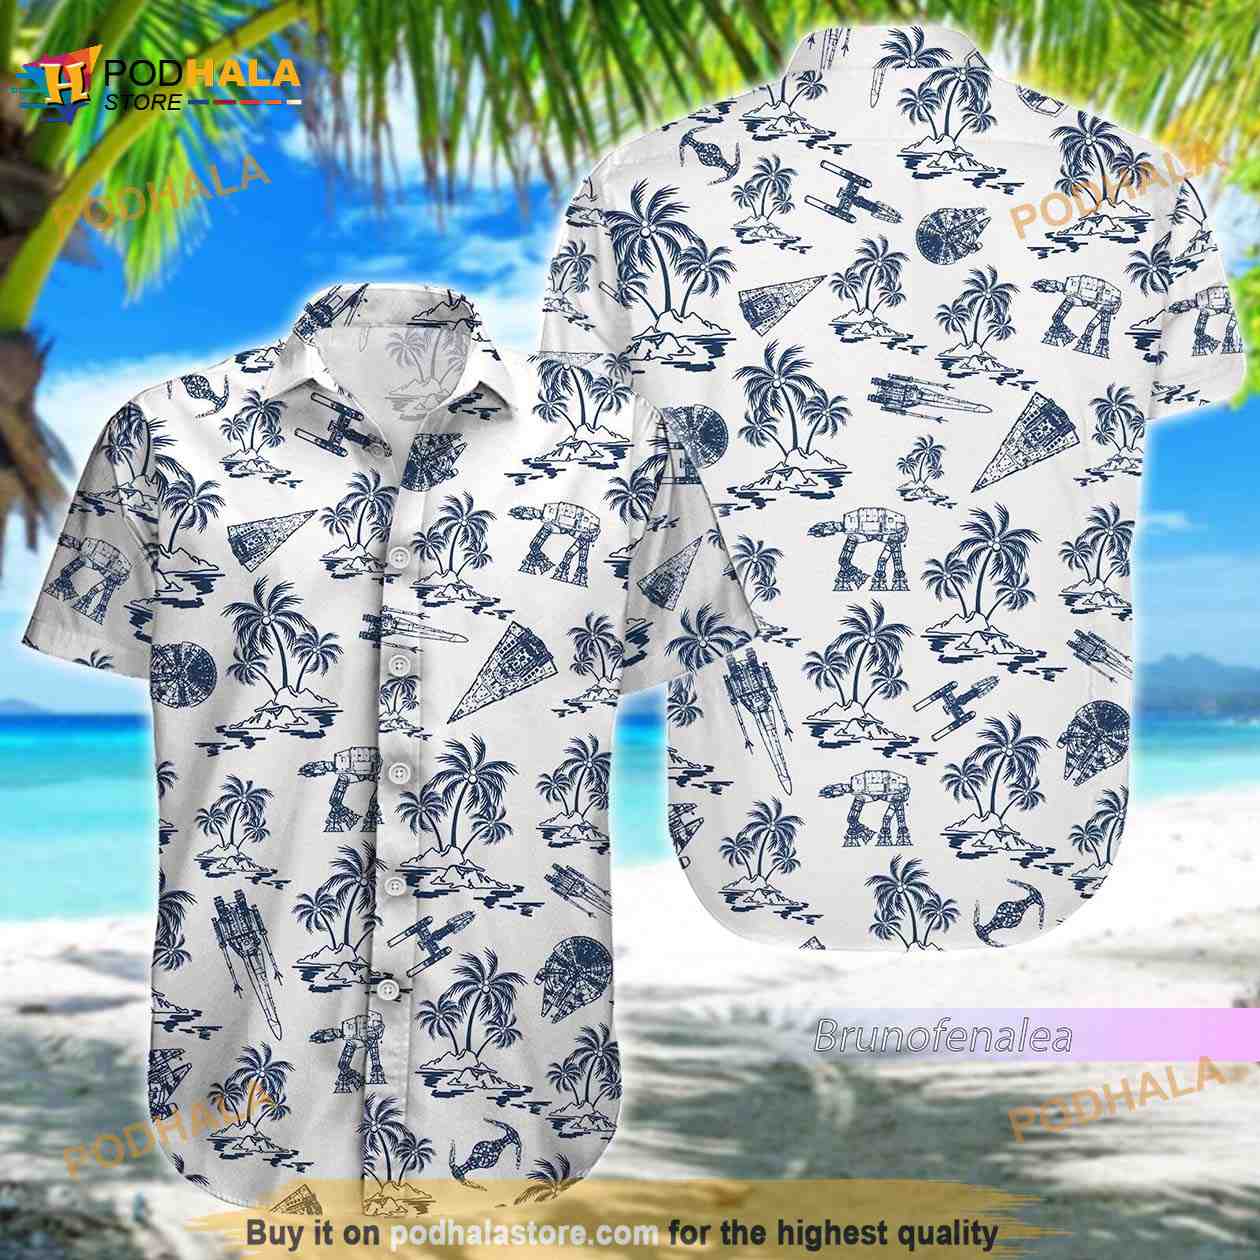 Star Wars Darth Vader Surfing Hawaiian Shirt, Beach Summer Aloha Shirt -  Bring Your Ideas, Thoughts And Imaginations Into Reality Today